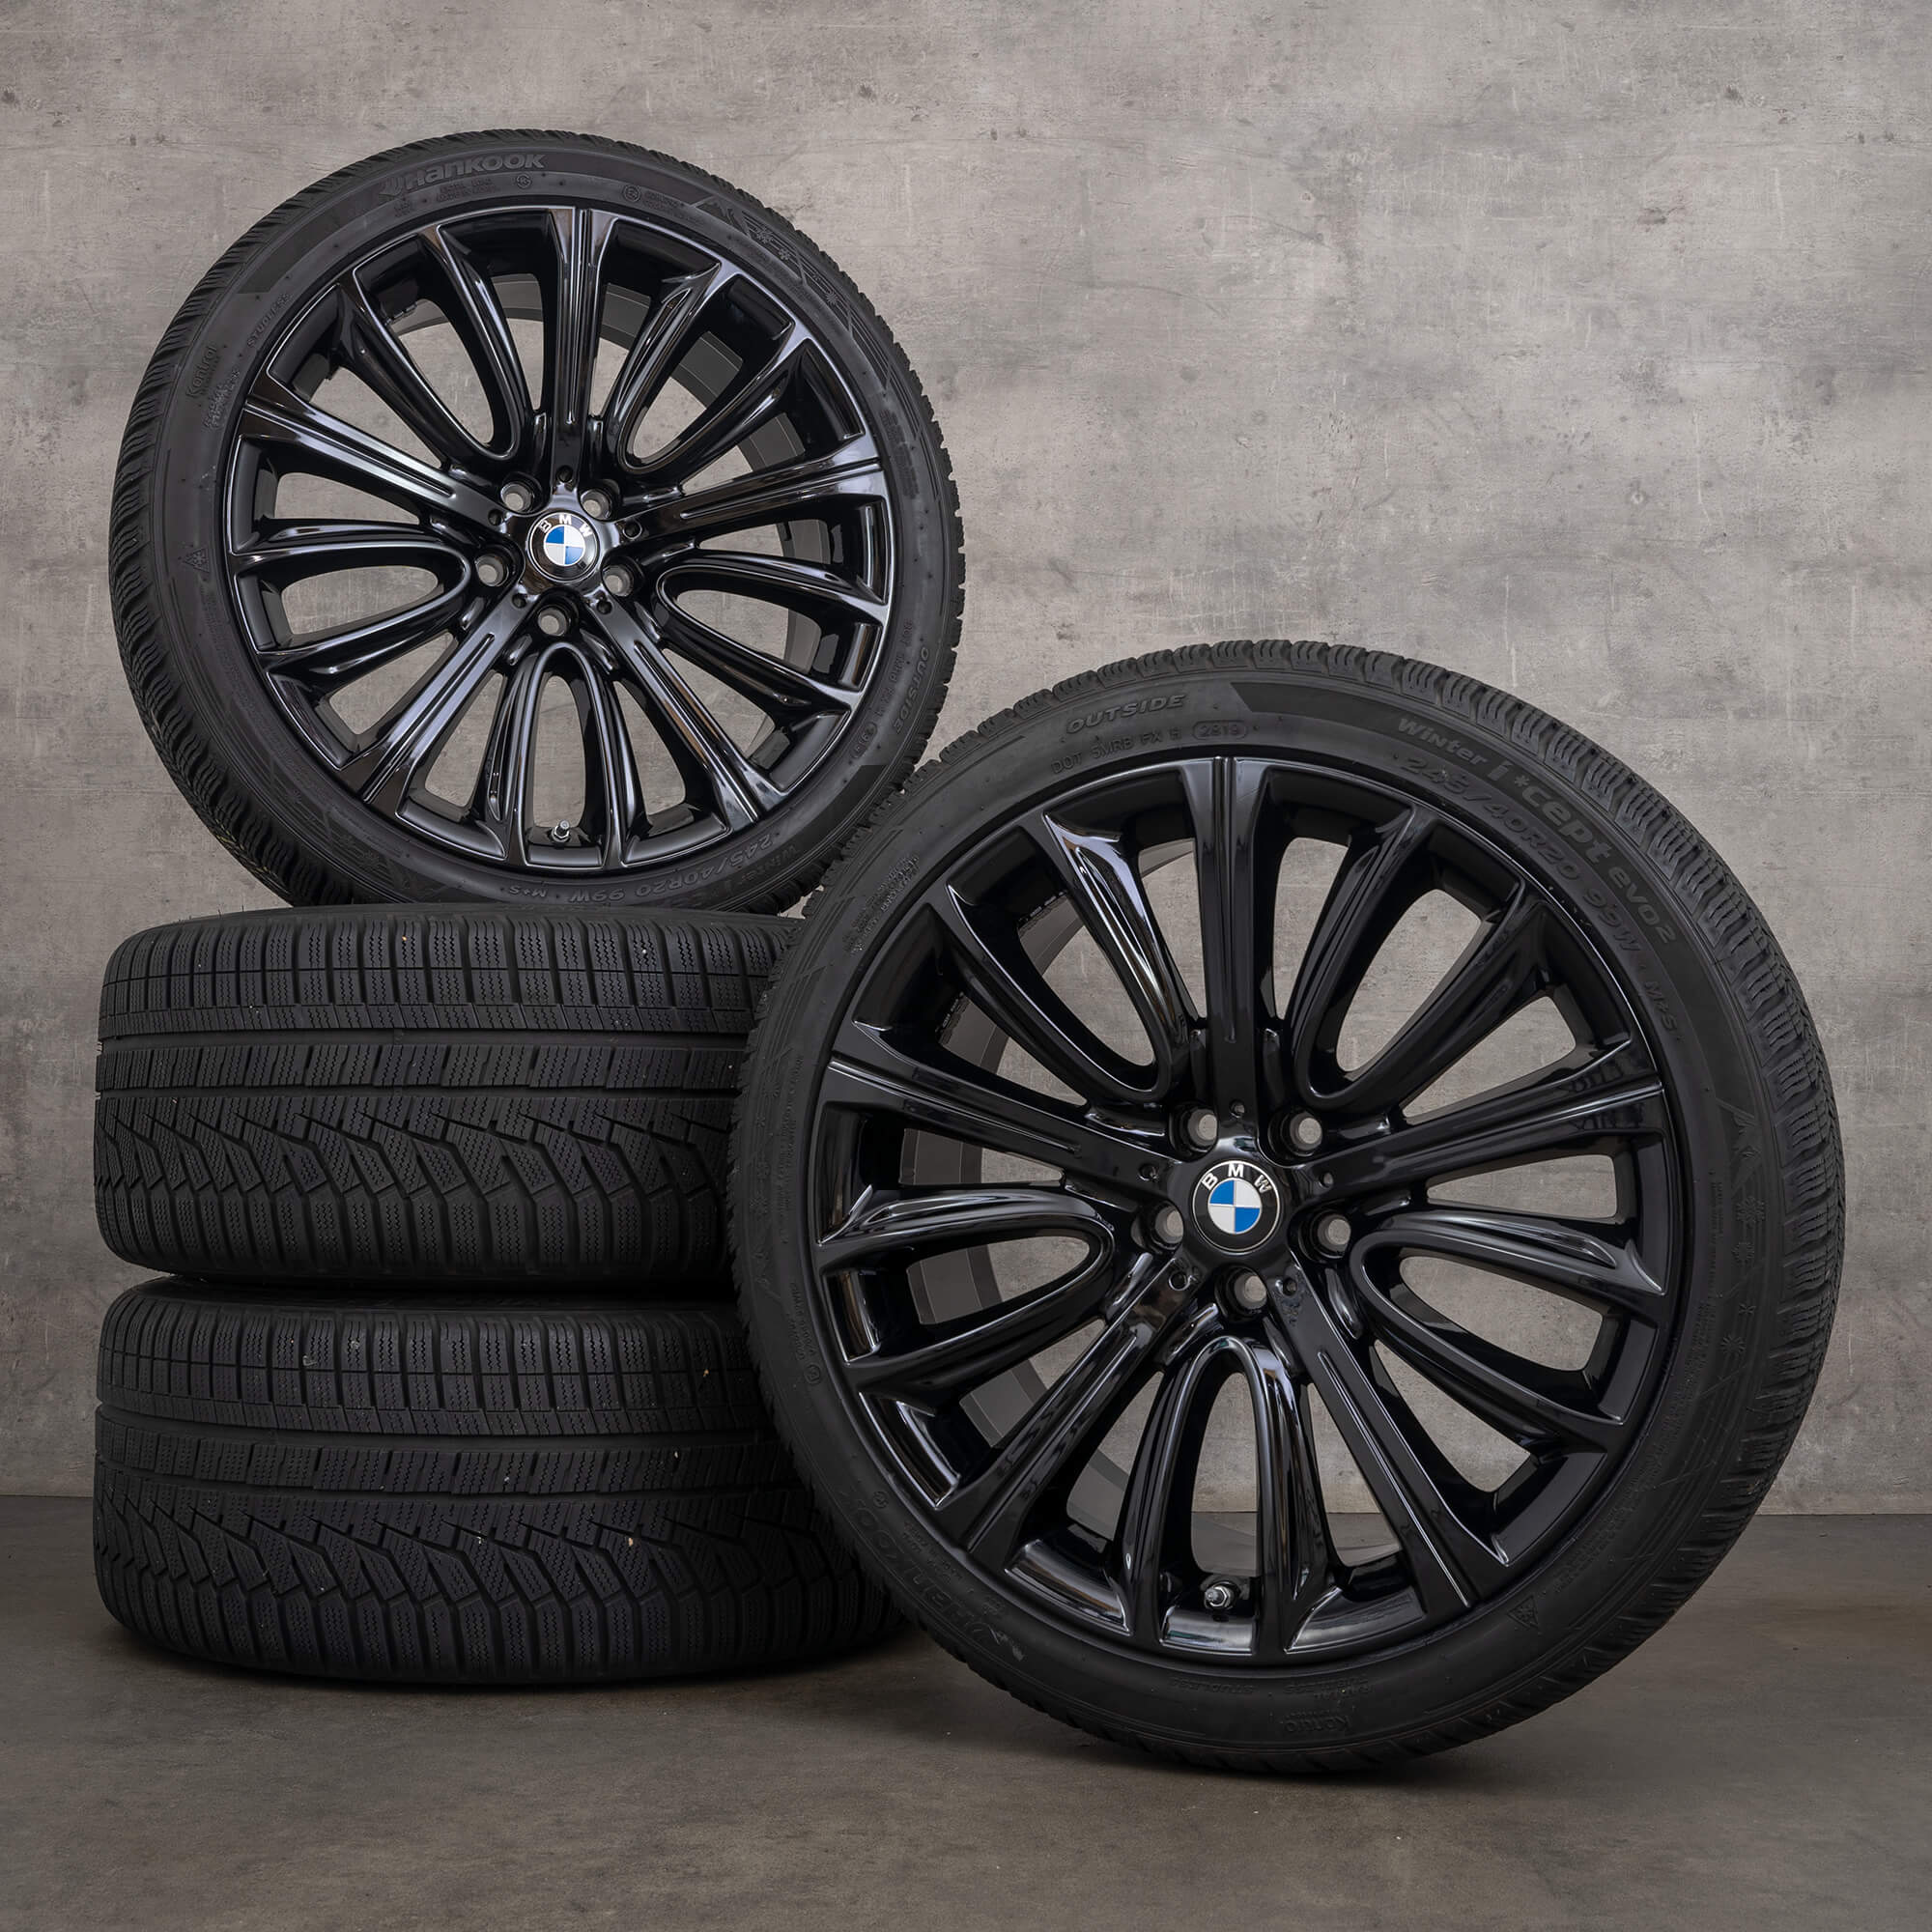 BMW 6 Series GT G32 7 G11 G12 winter wheels 20 inch rims 628 tires